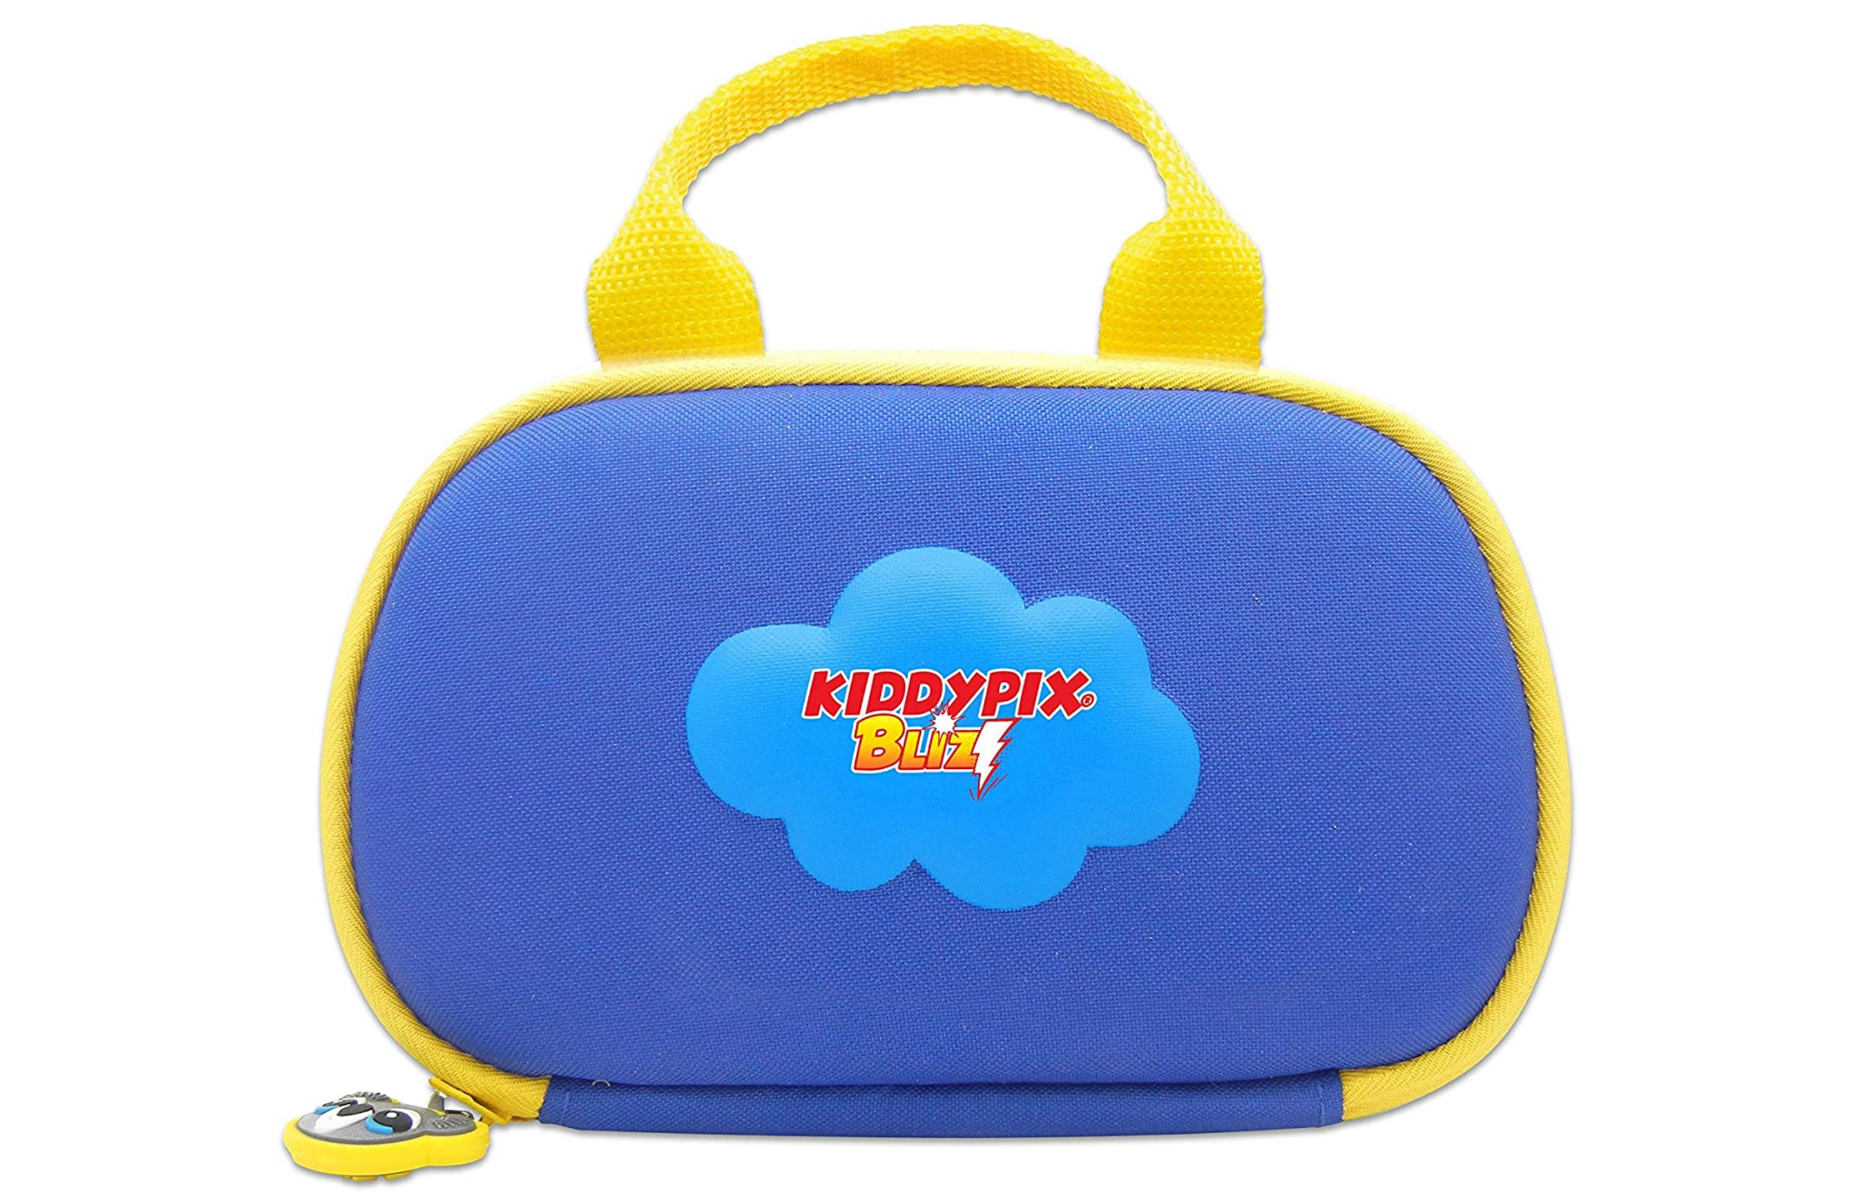 Easypix Kiddypix - Blizz (Blue) Digital camera for children - Blue